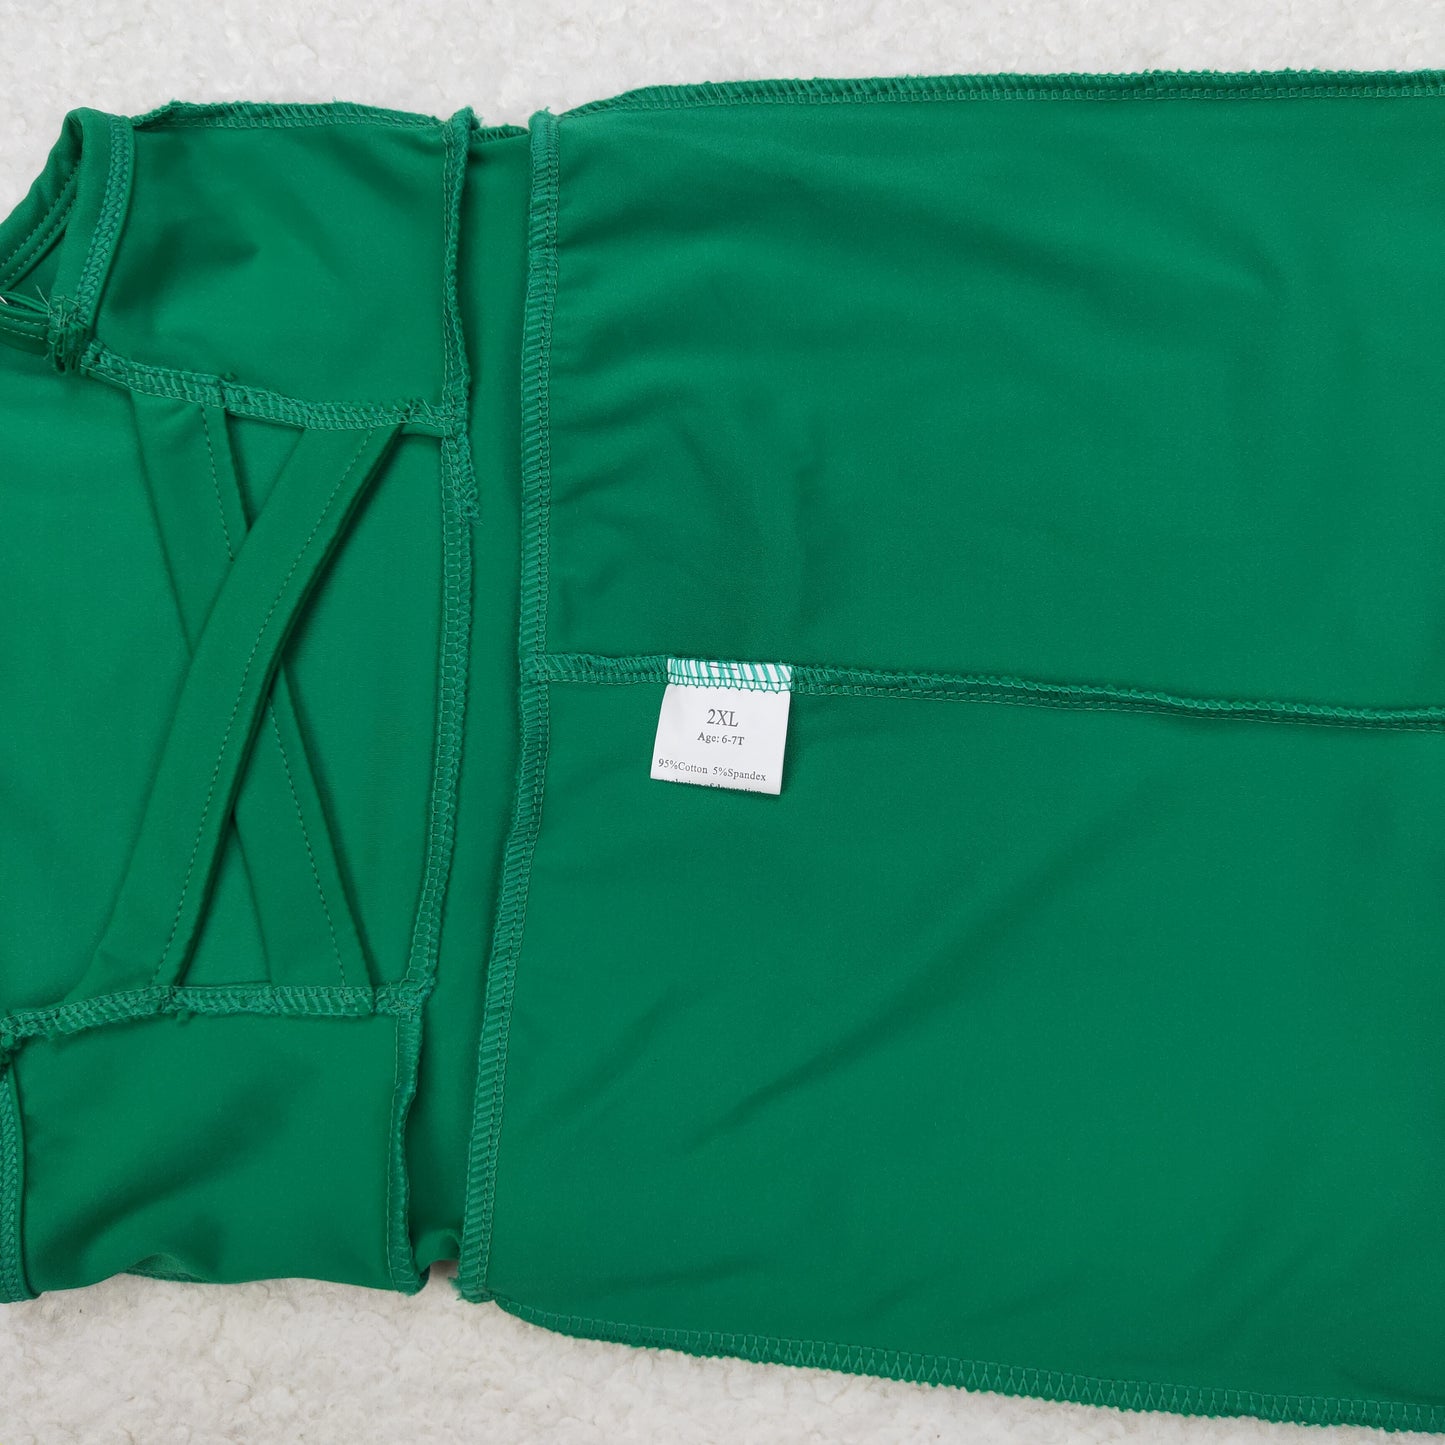 rts no moq S0444 Solid green sportswear skirt swimsuit